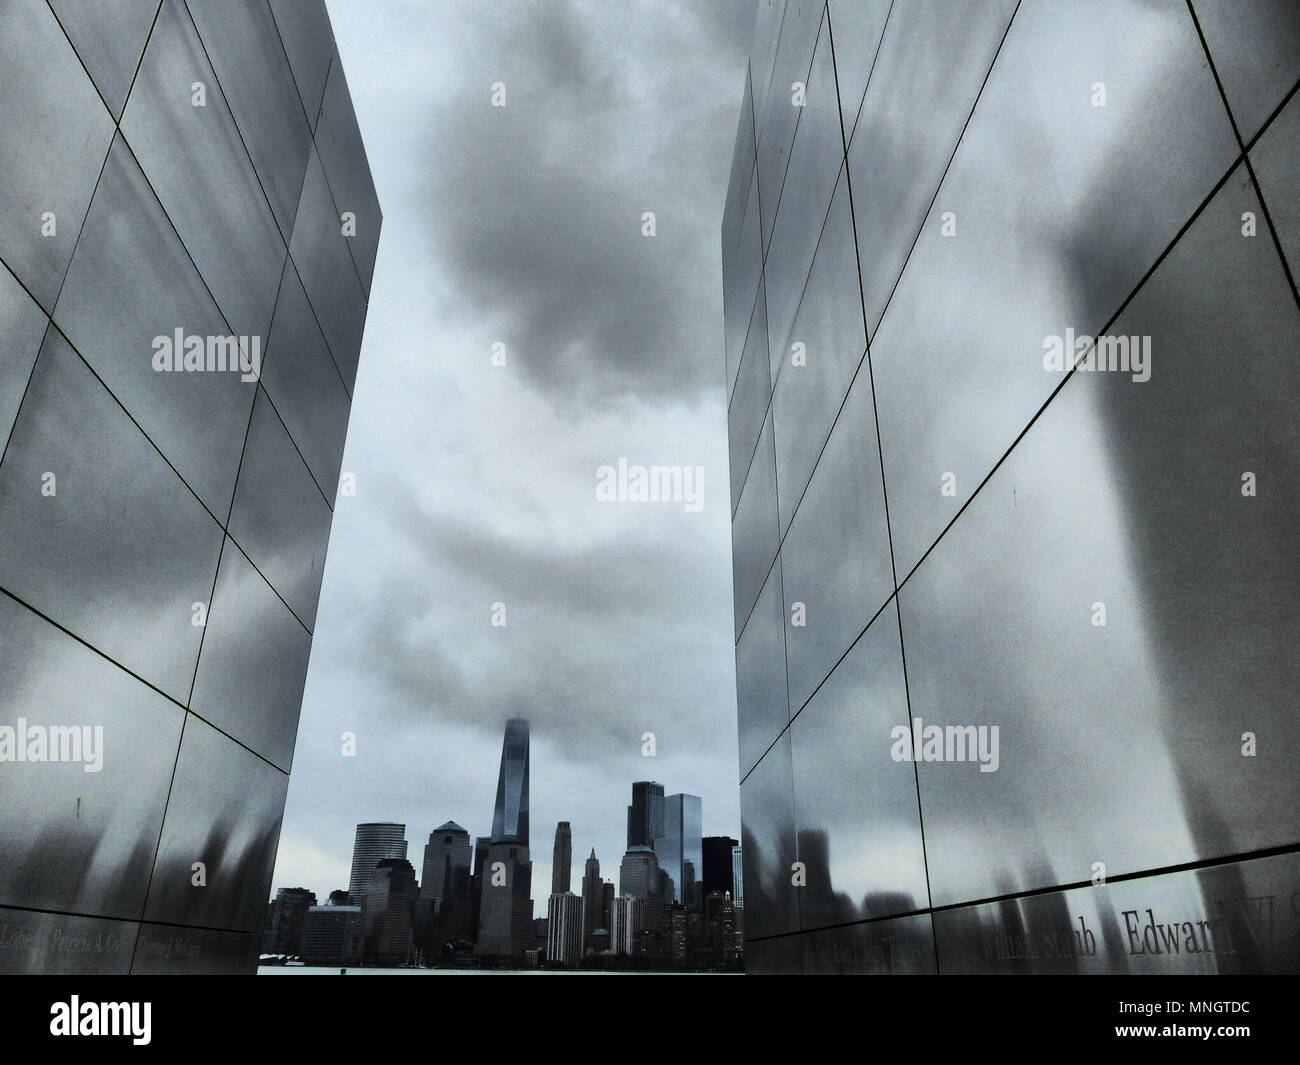 Memorial, 9/11 vittime, Open Sky Memorial, riflessione, attacco terroristico, 9/11, memorial,Manhattan, Freedom Tower, World Trade Center Foto Stock